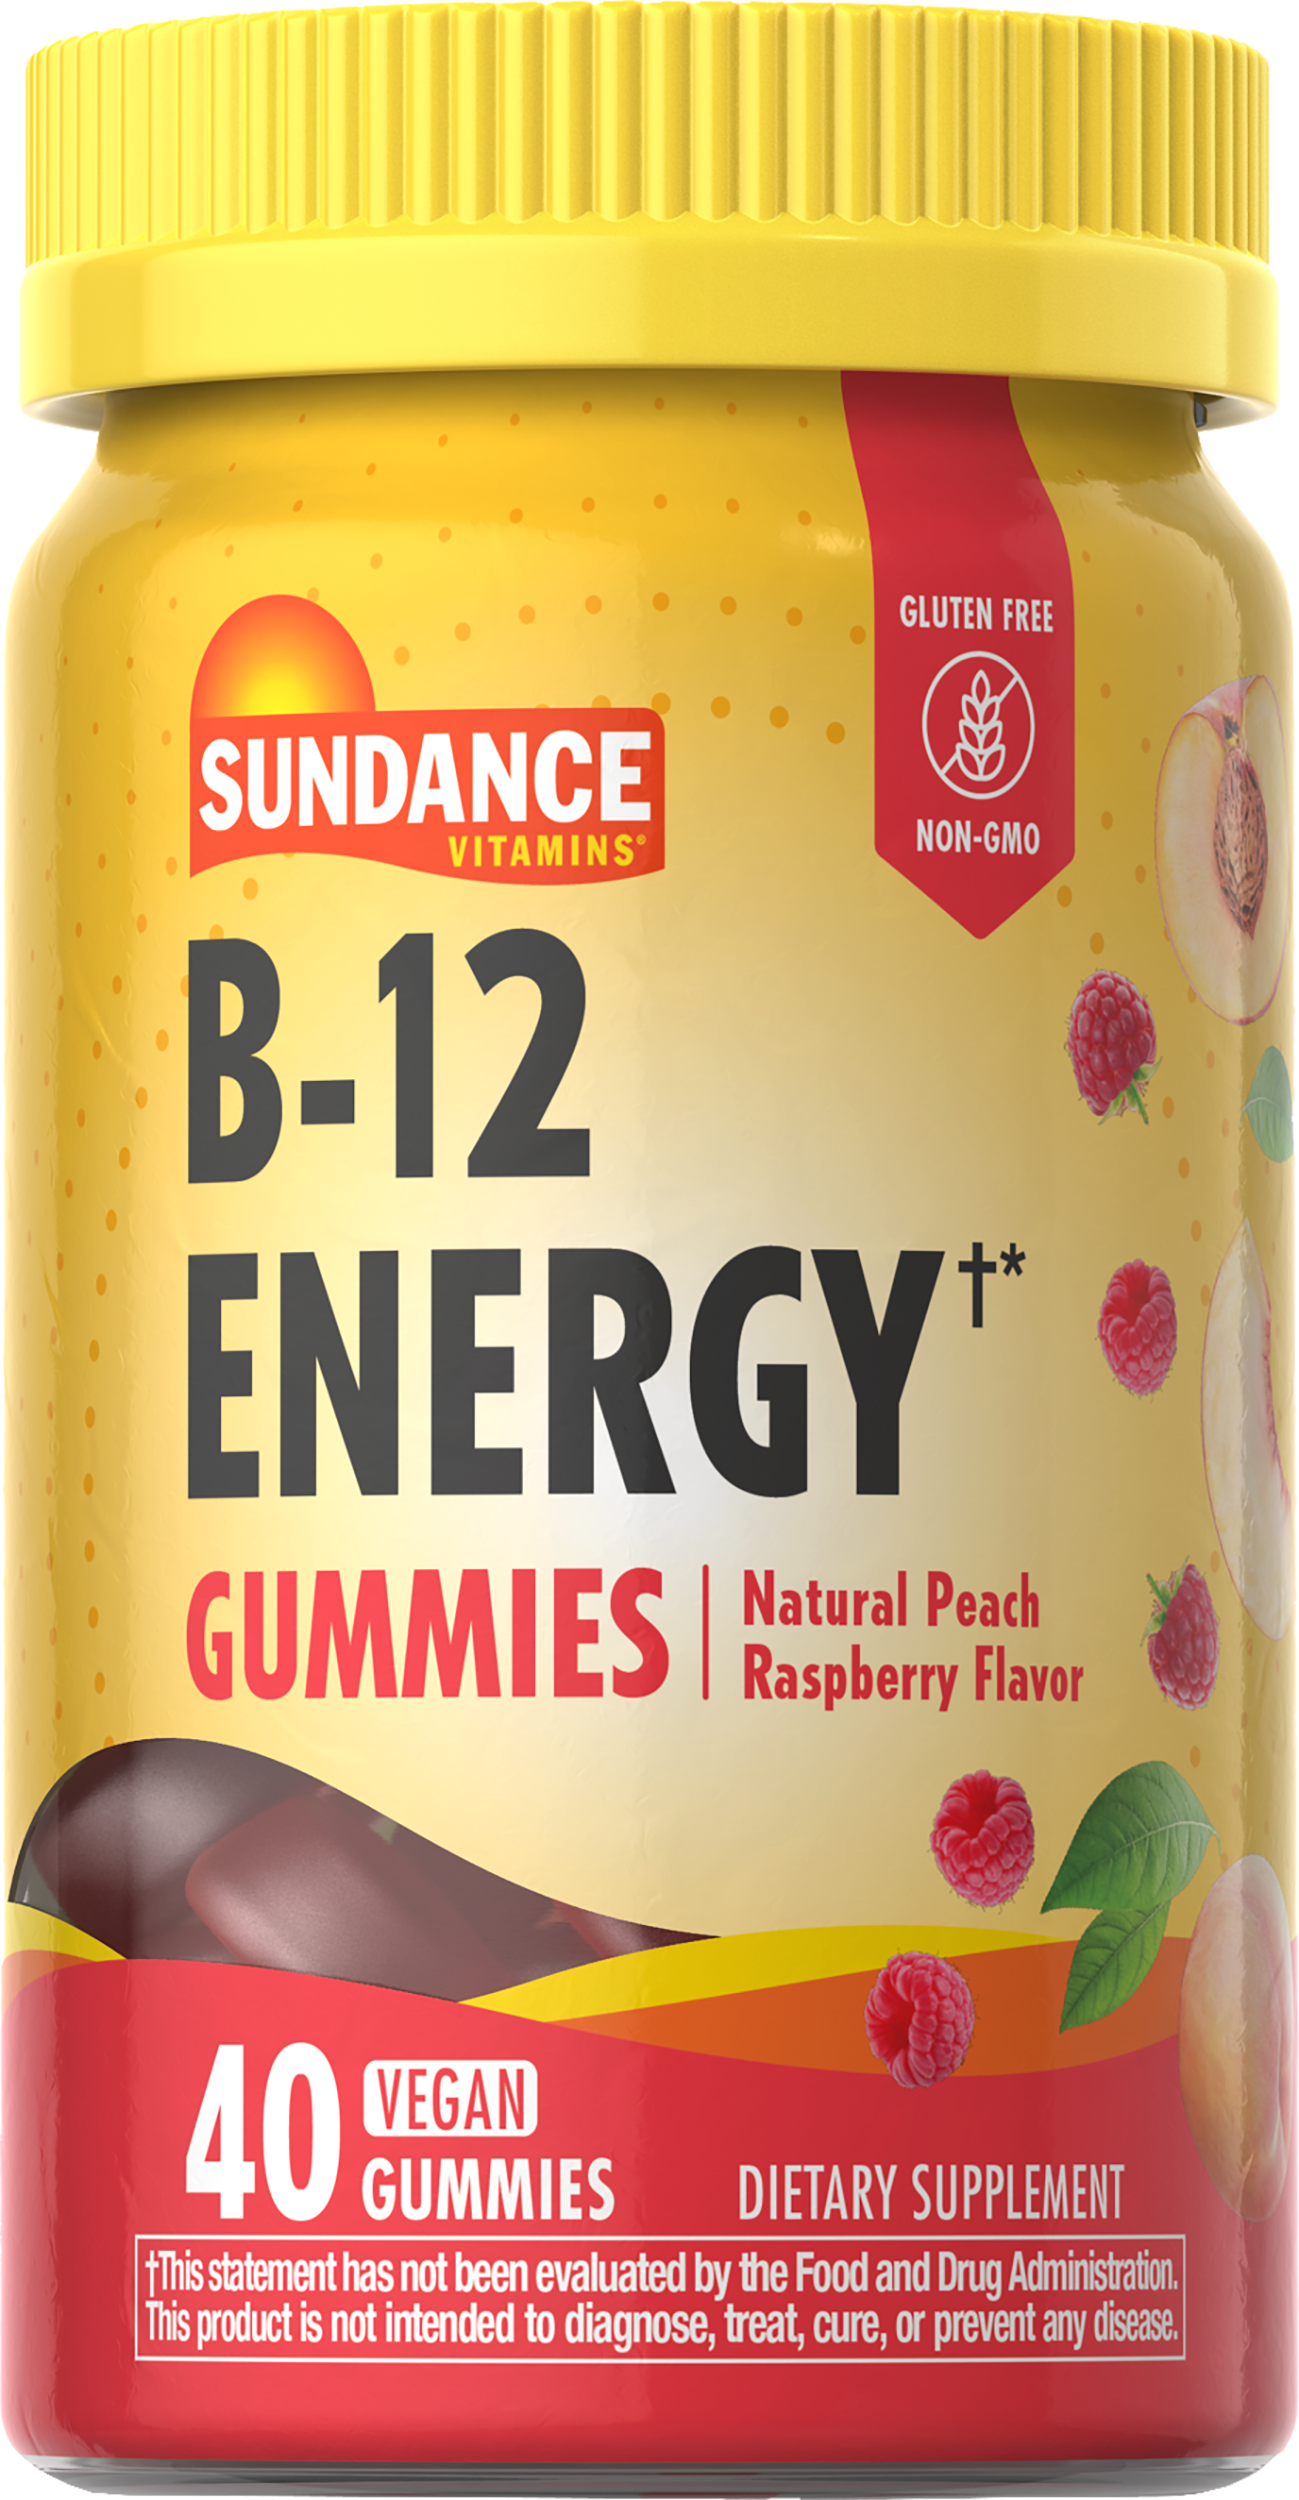 Vitamin B-12 Energy